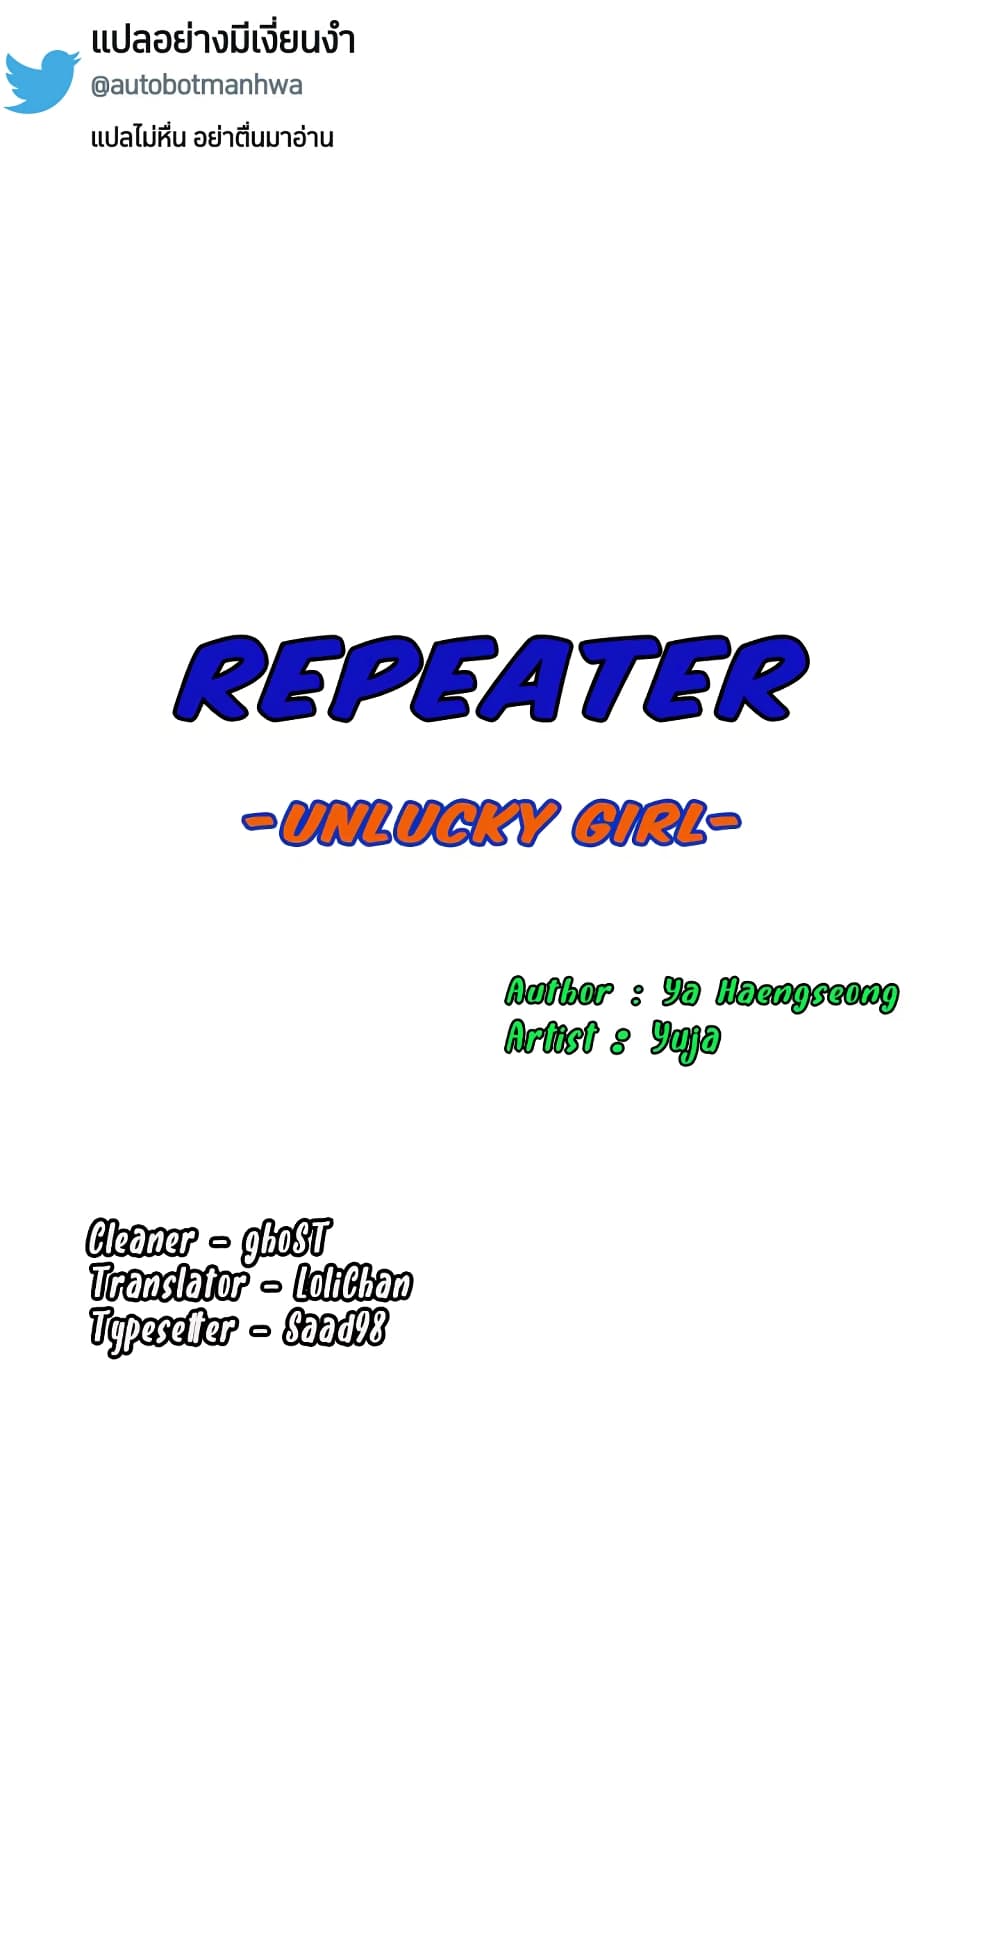 Repeater 1-1